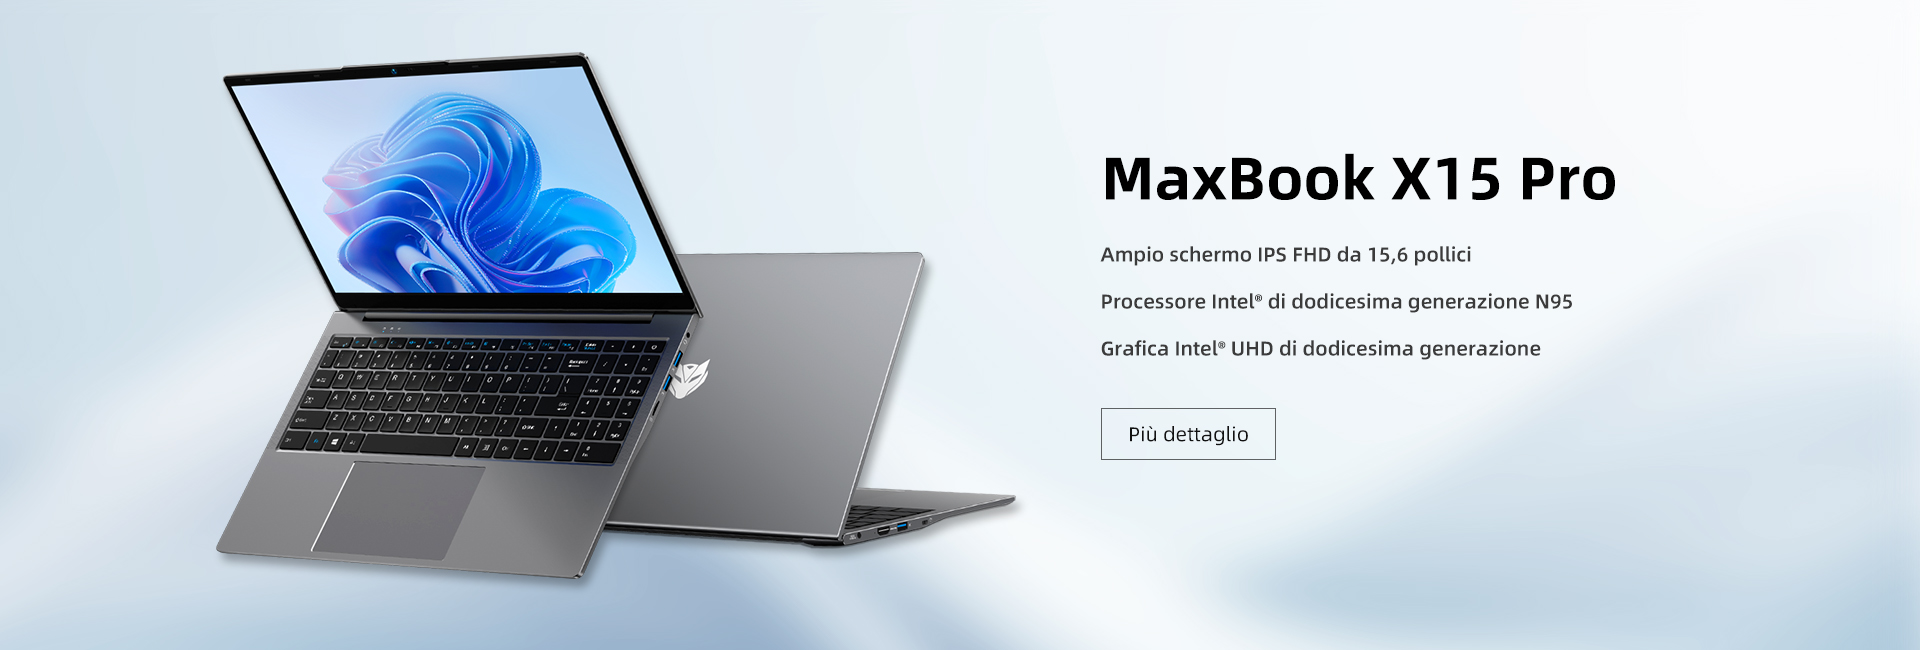 MaxBook X15 Pro